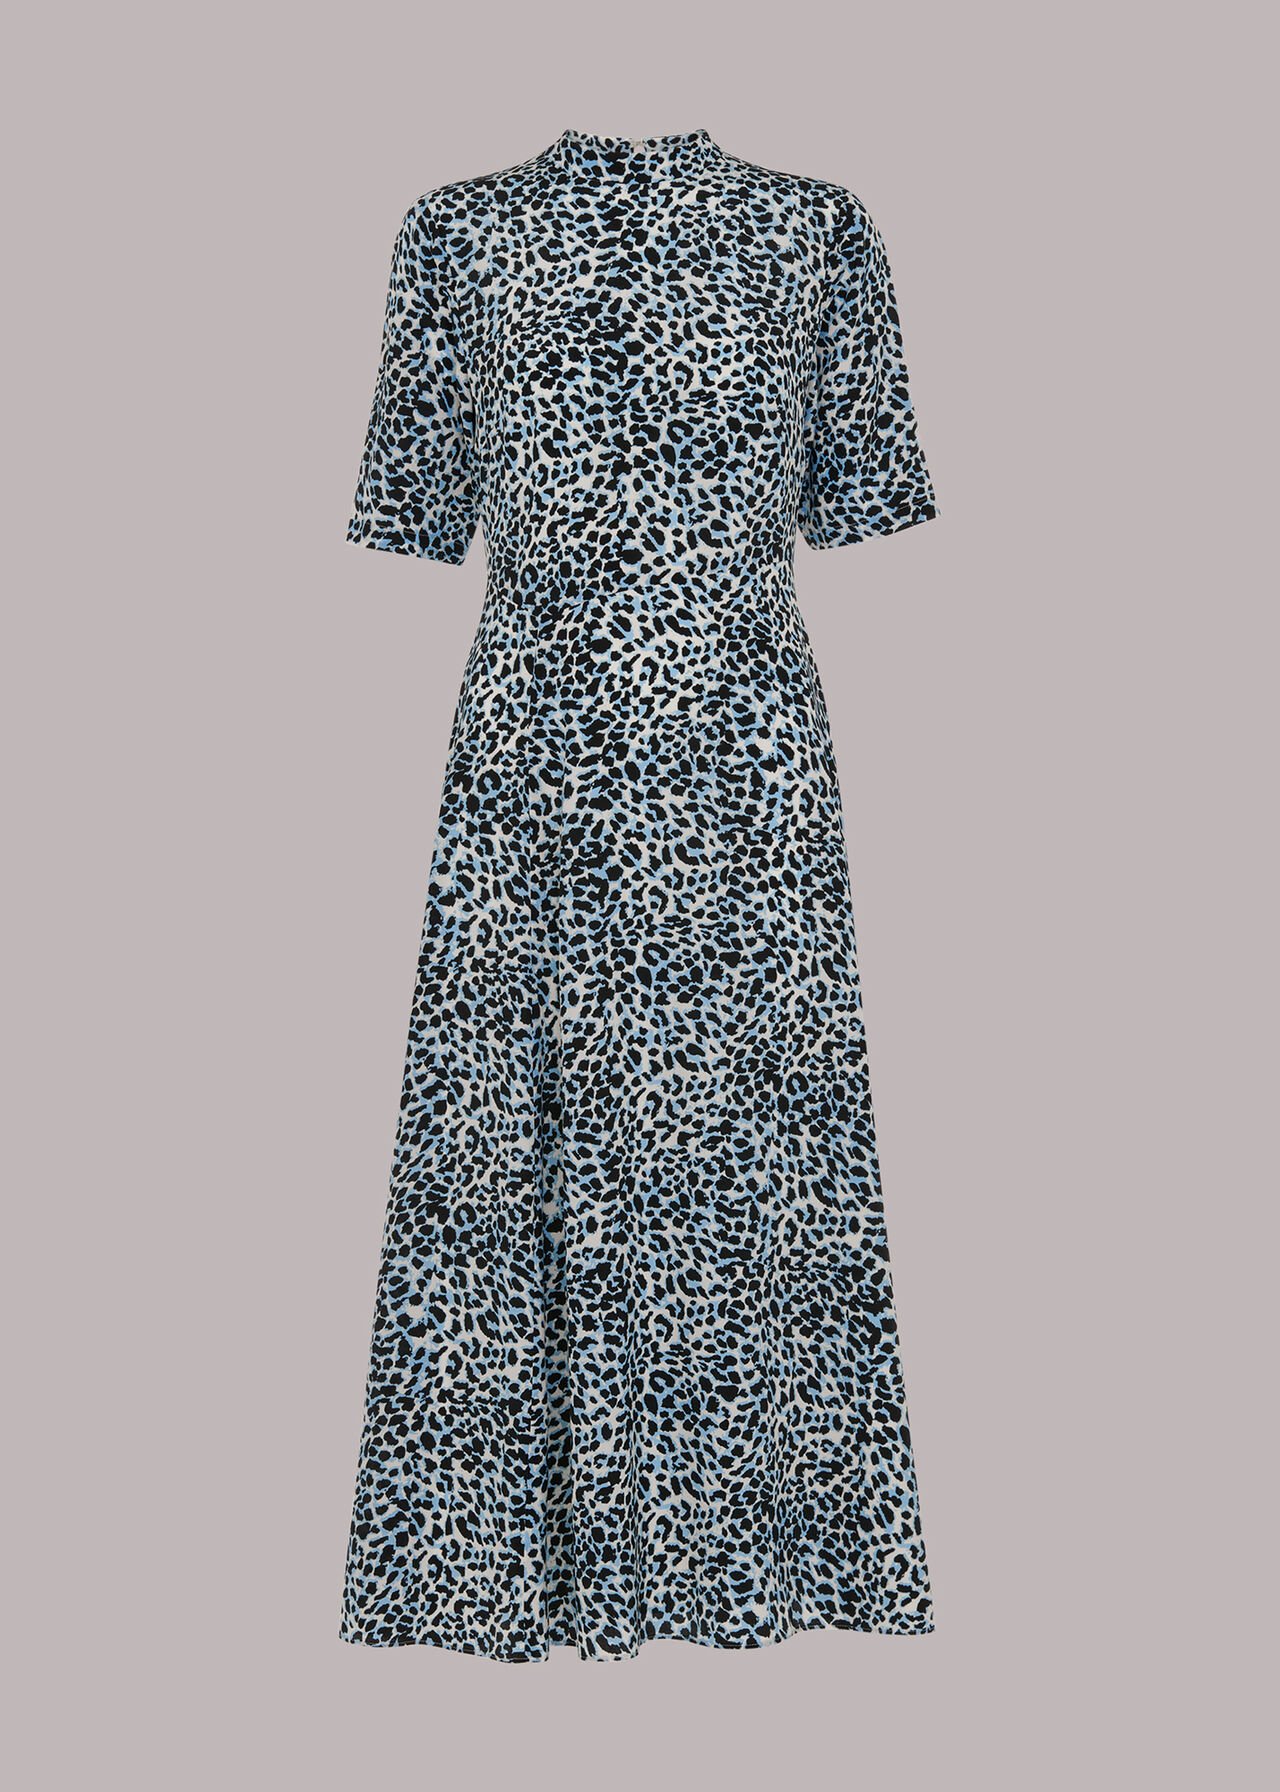 Abstract Cheetah Silk Dress